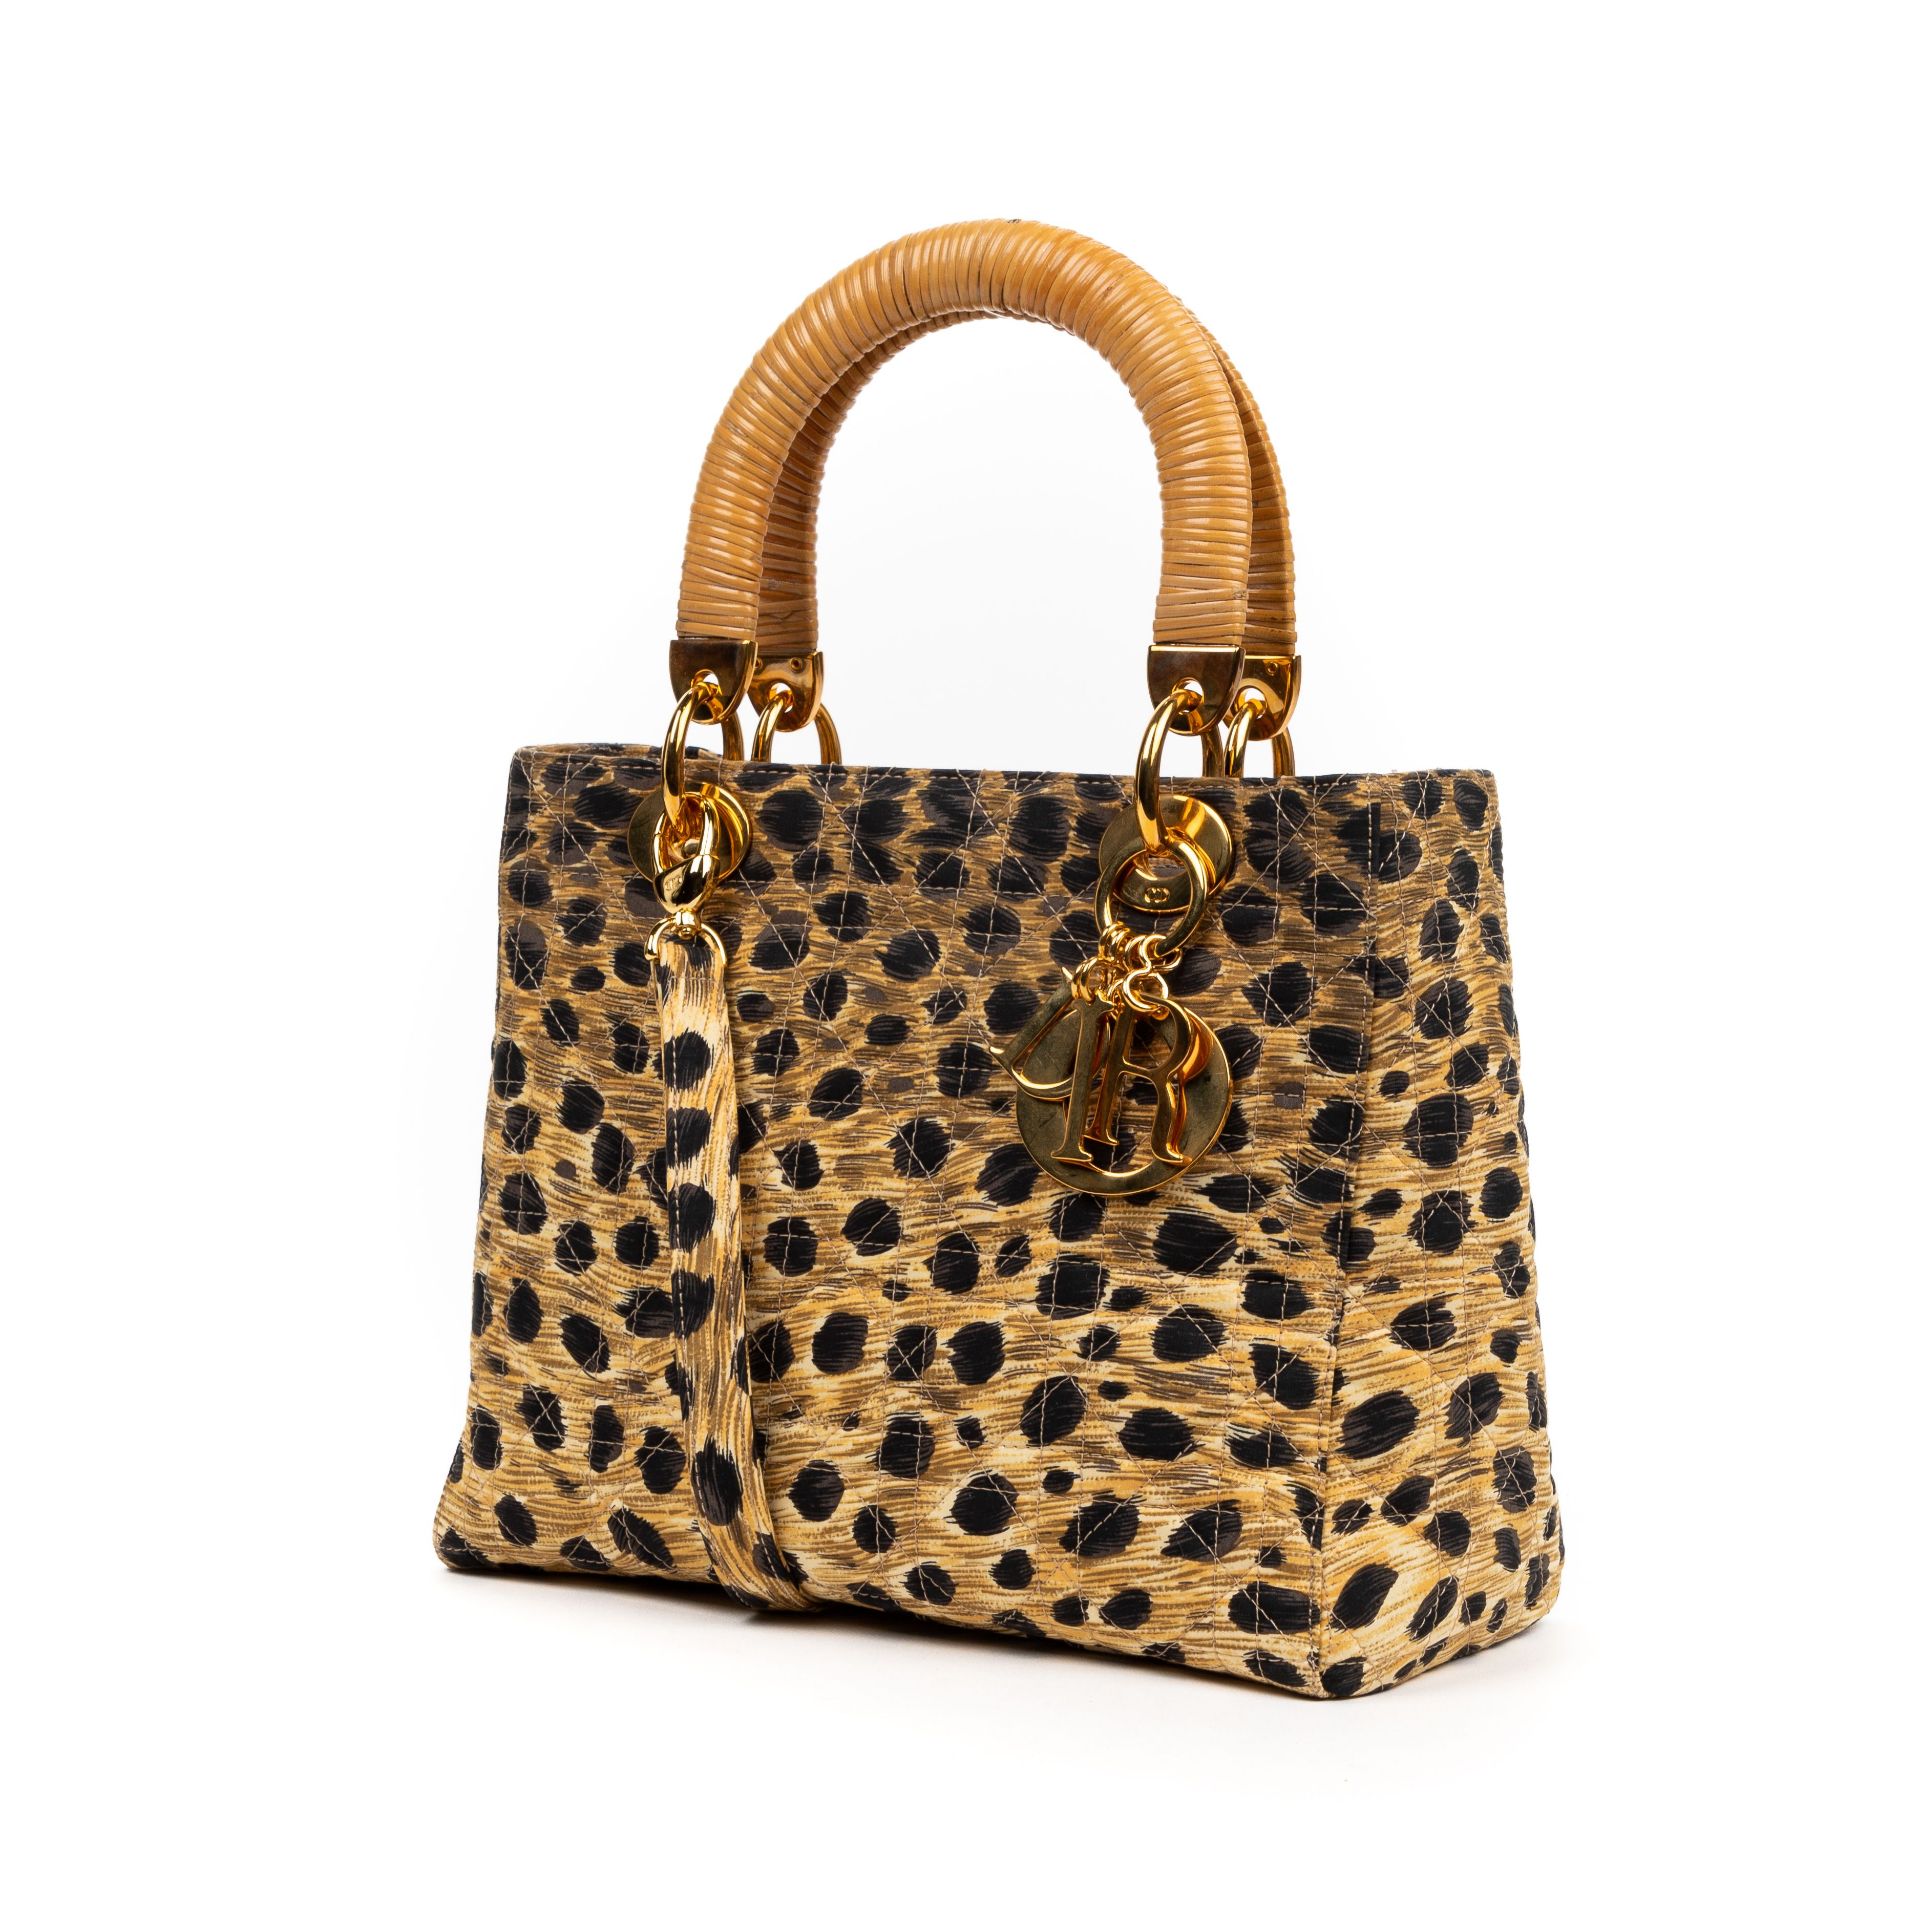 RRP £2800 Christian Dior Yellow/Black Rare Vintage Lady Leopard Handbag EAG4517 Grade A (Please